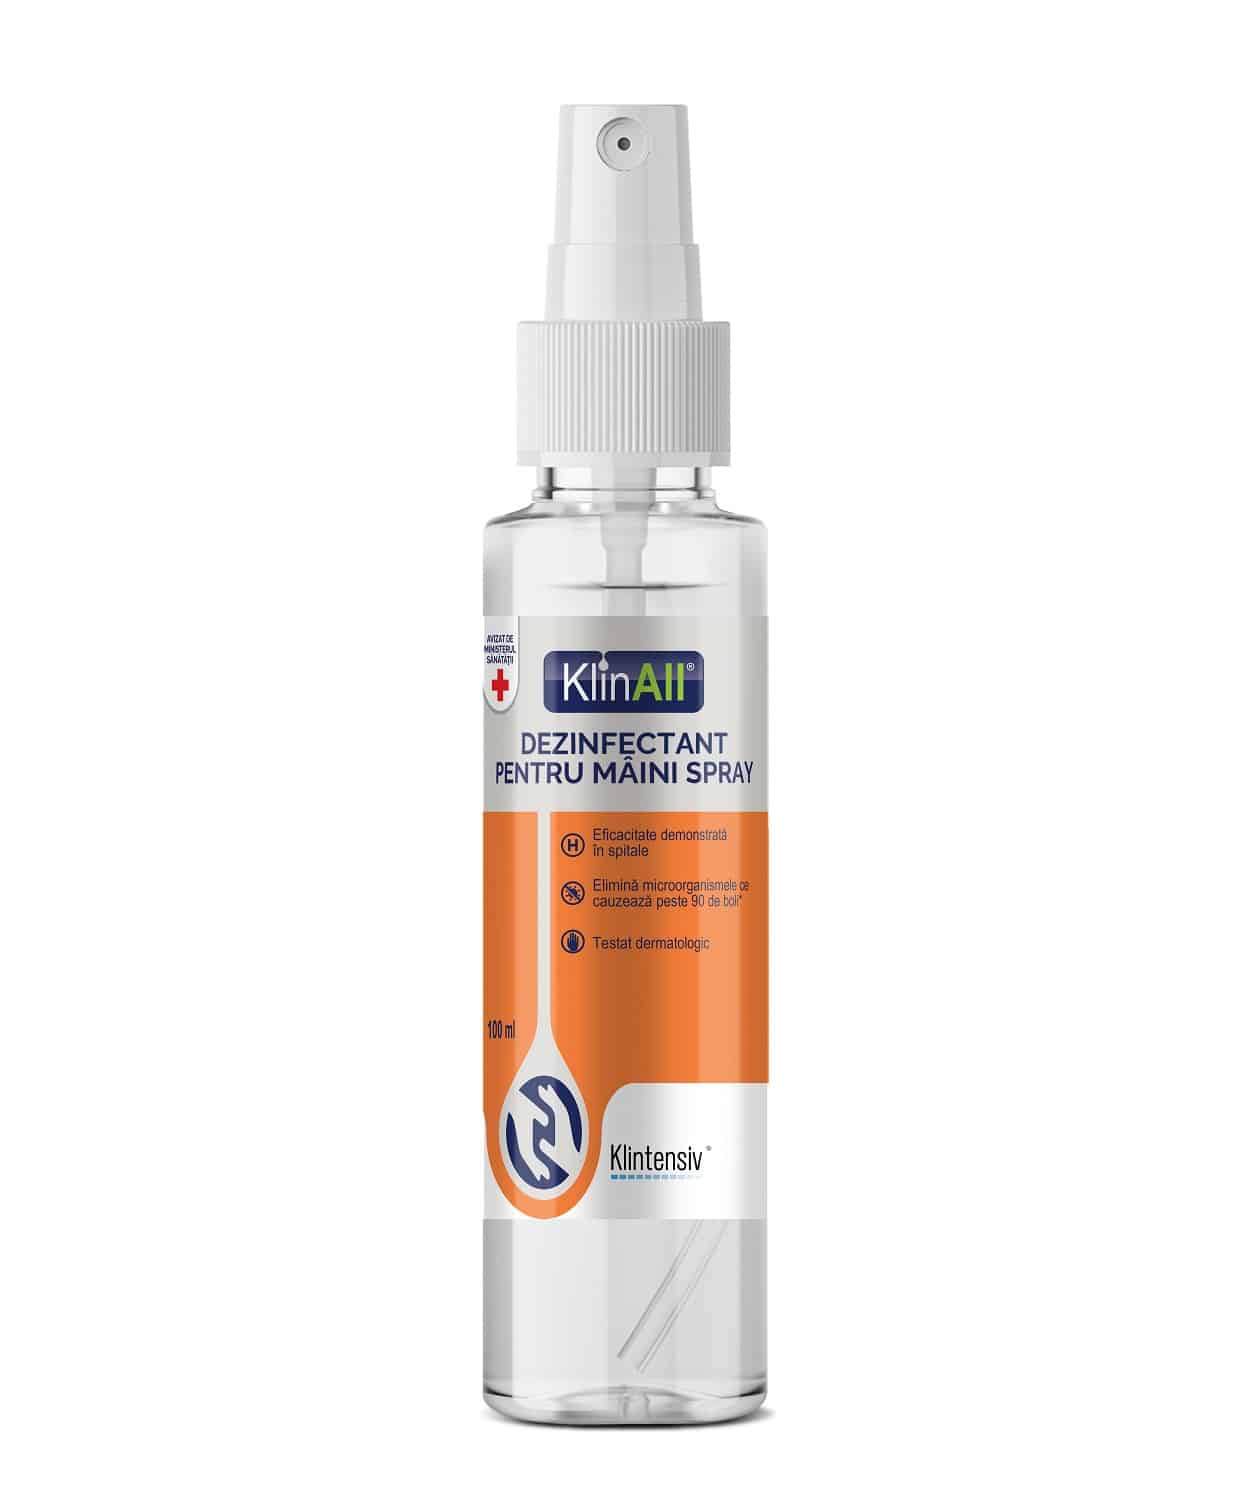 KlinAll® – Dezinfectant pentru maini spray 100 ml Klintensiv